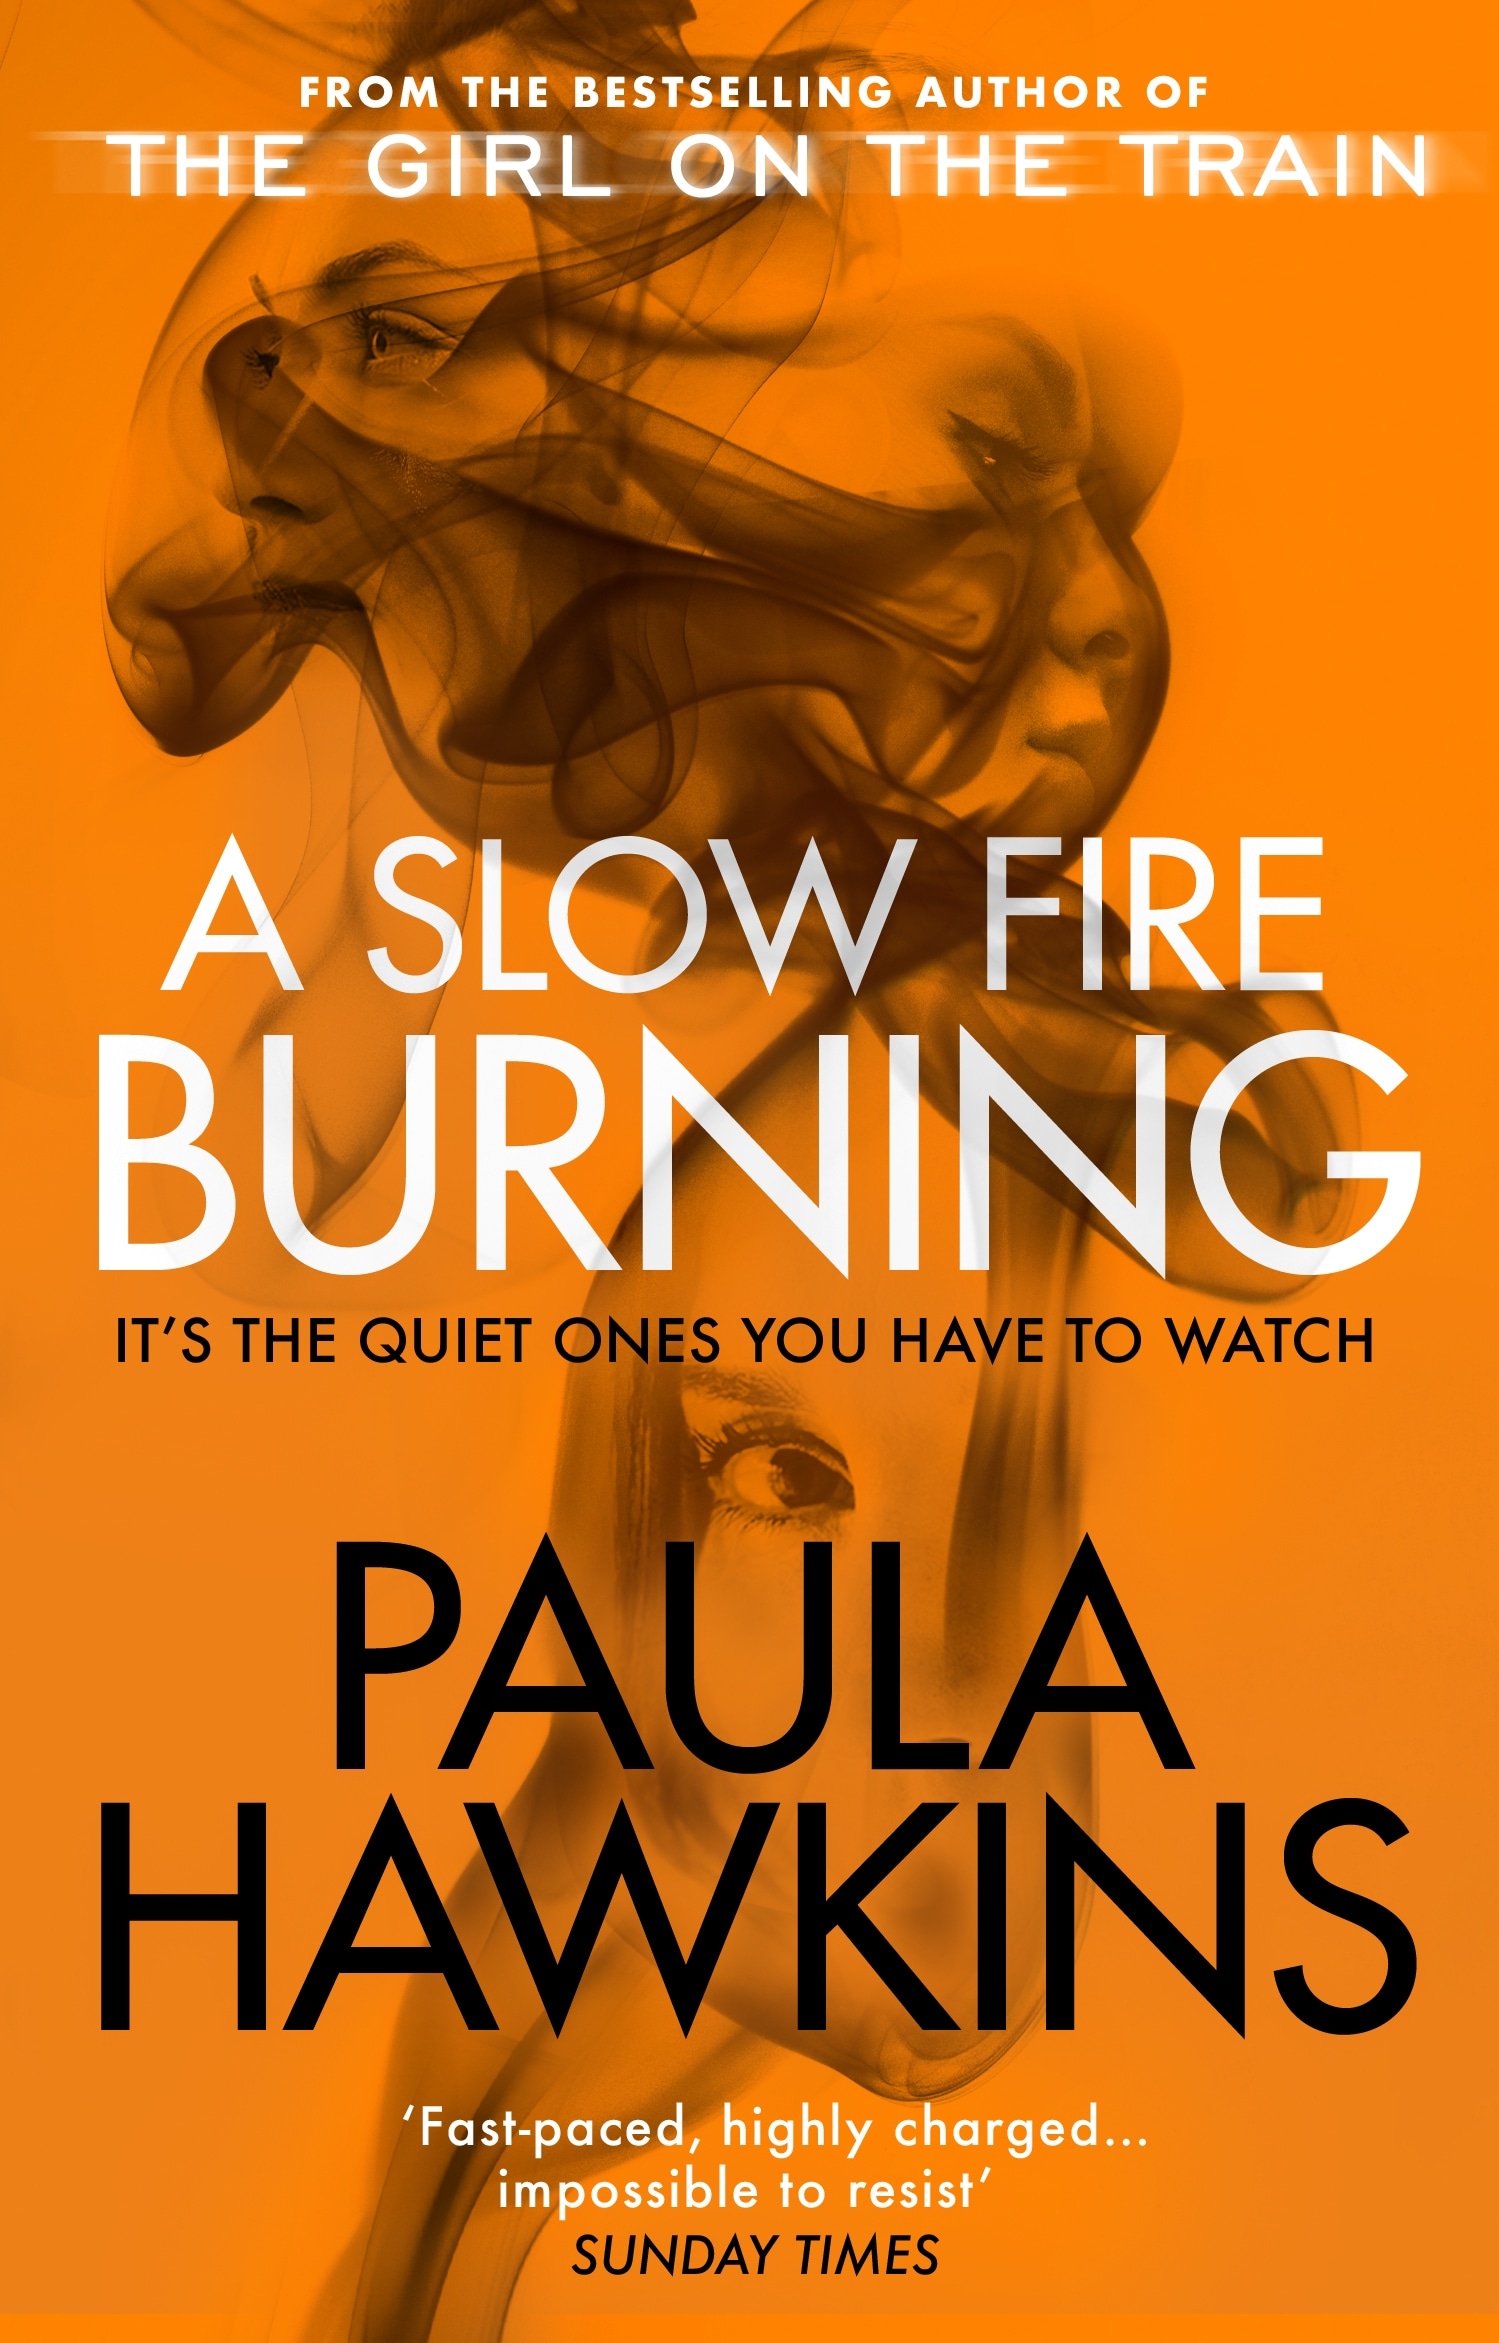 Book “A Slow Fire Burning” by Paula Hawkins — July 7, 2022